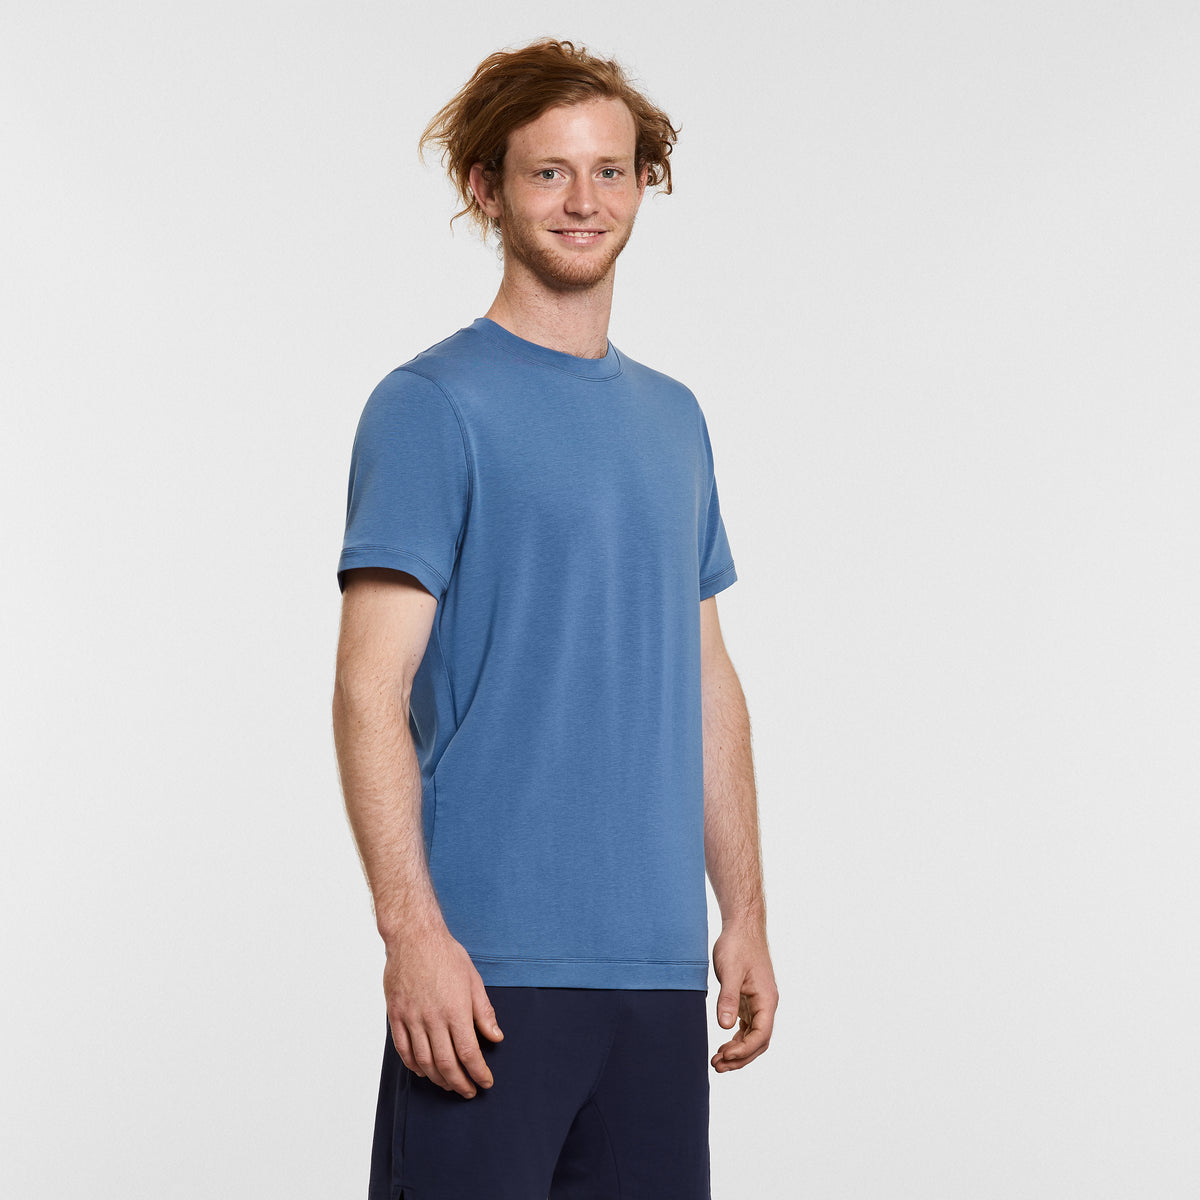 man wearing blue mens yoga t-shirt by warrior addict 